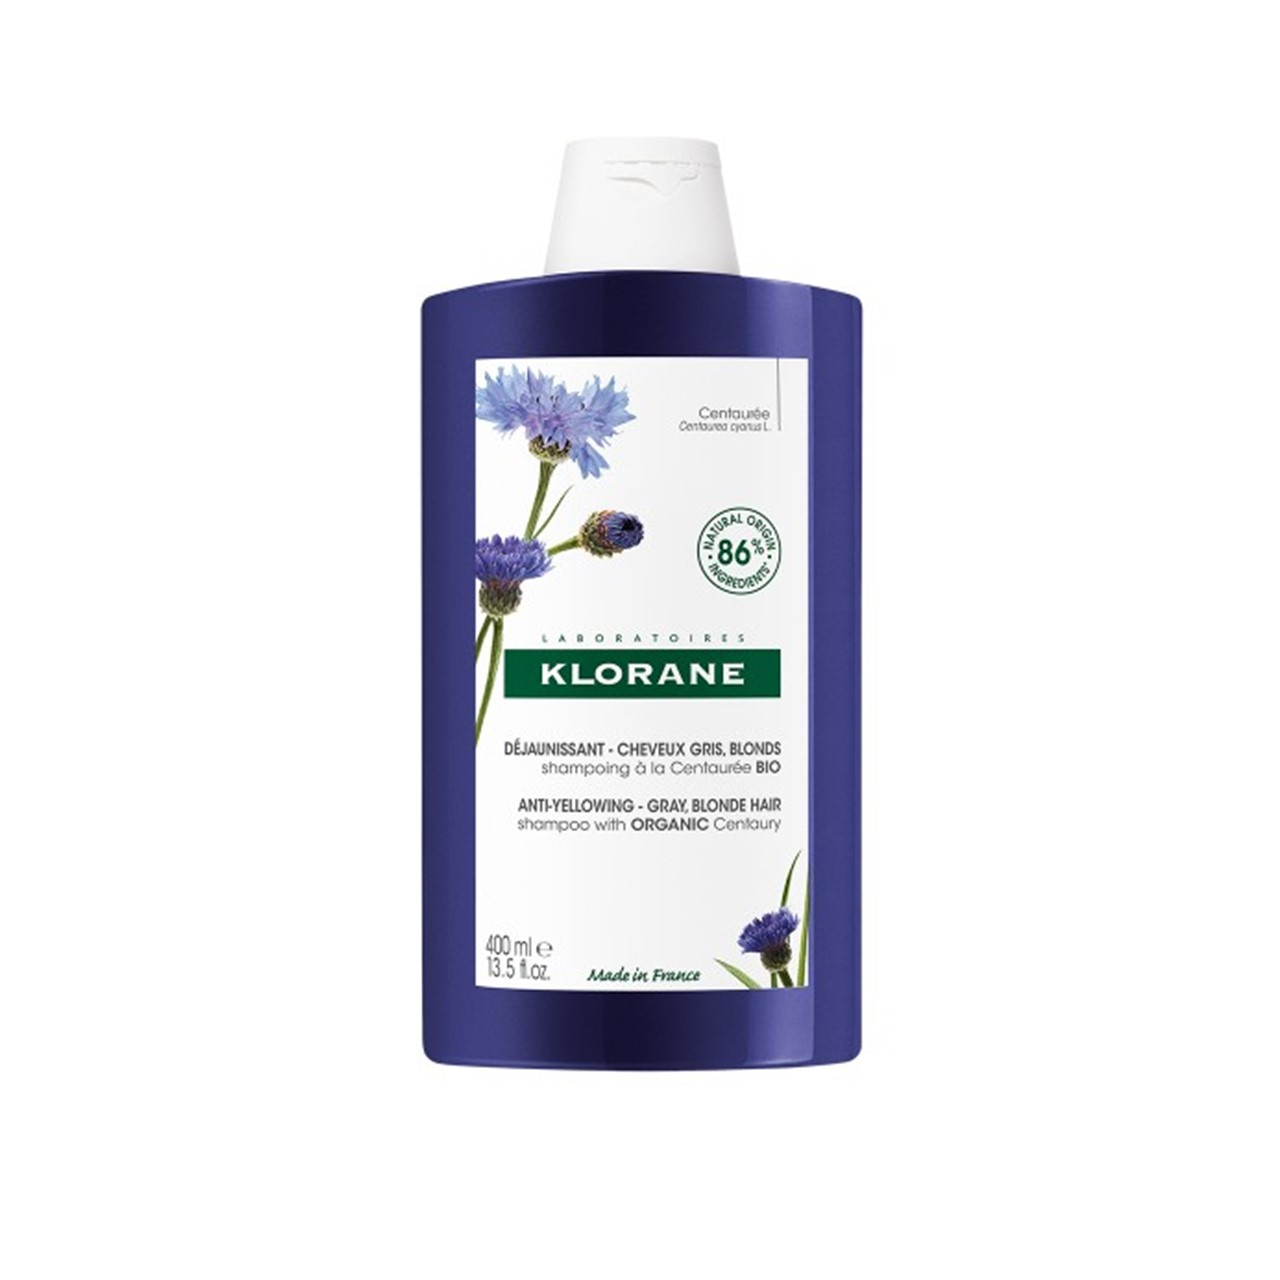 Klorane Anti-Yellowing Shampoo with Centaury 400ml (13.53fl oz)